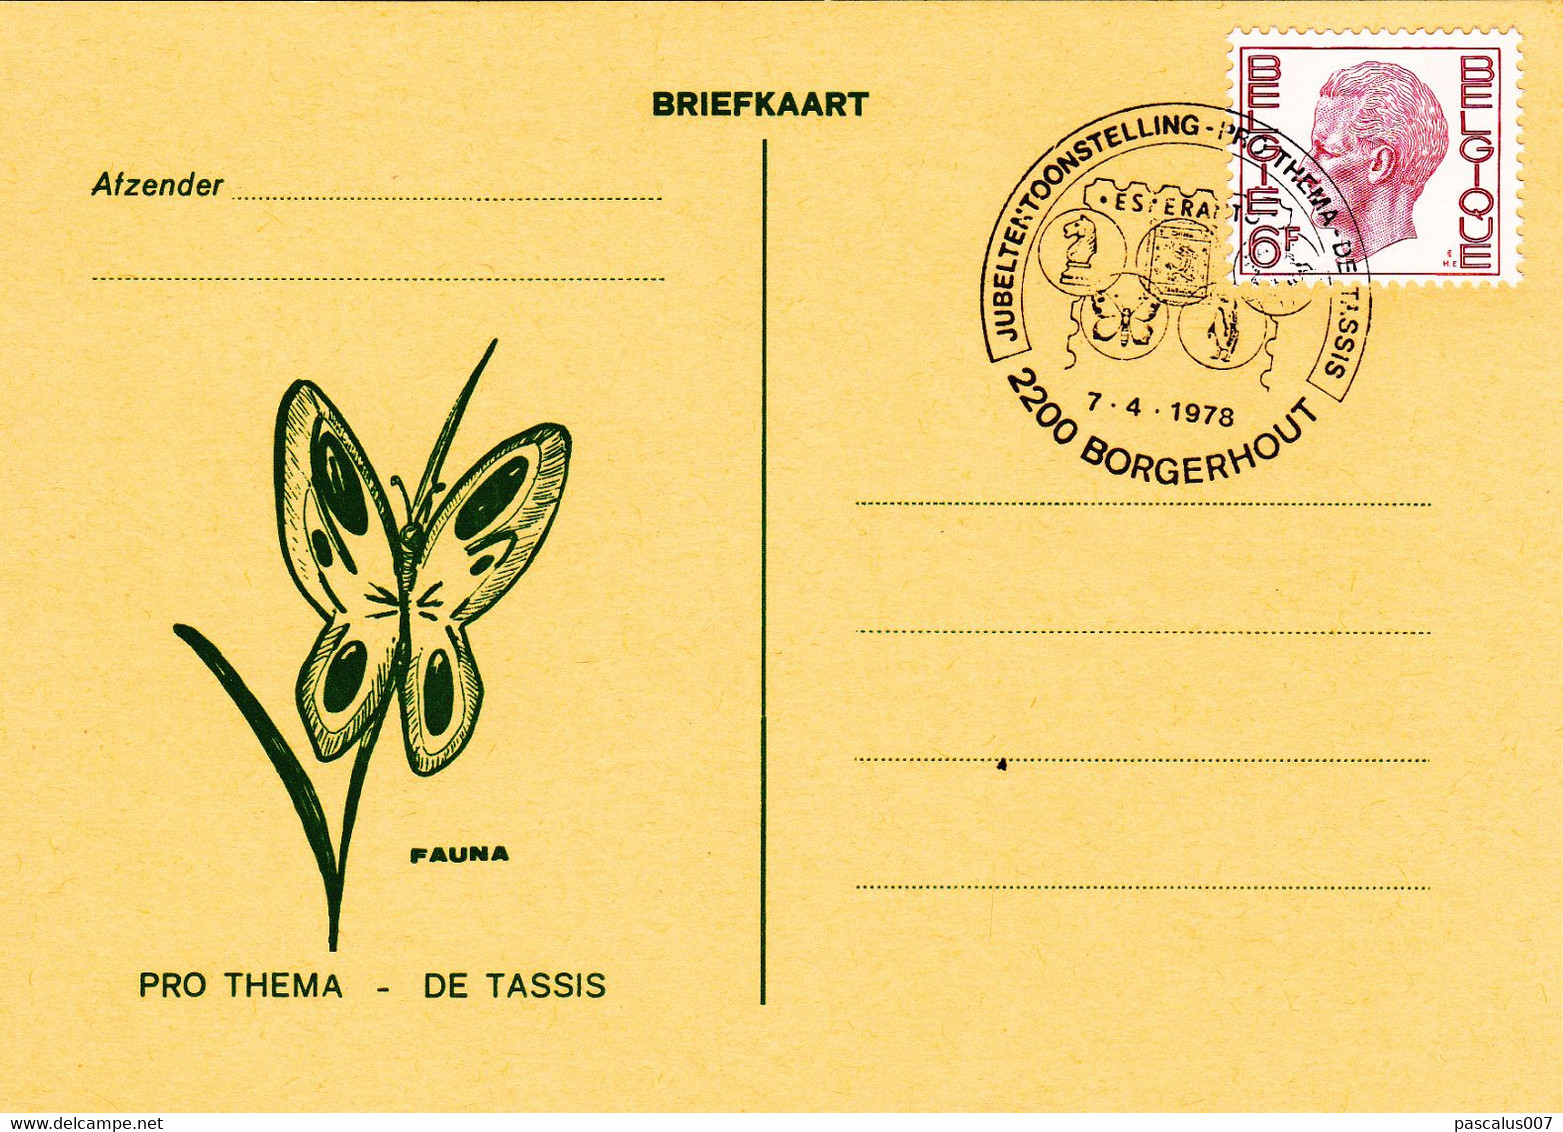 B01-396 6 Briefkaarten Met Stempel ESPERANTO - Pro Thema DE TASSIS - Jubeltentoonstelling 7-4-1978 2200 Borgerhout - Aerograms